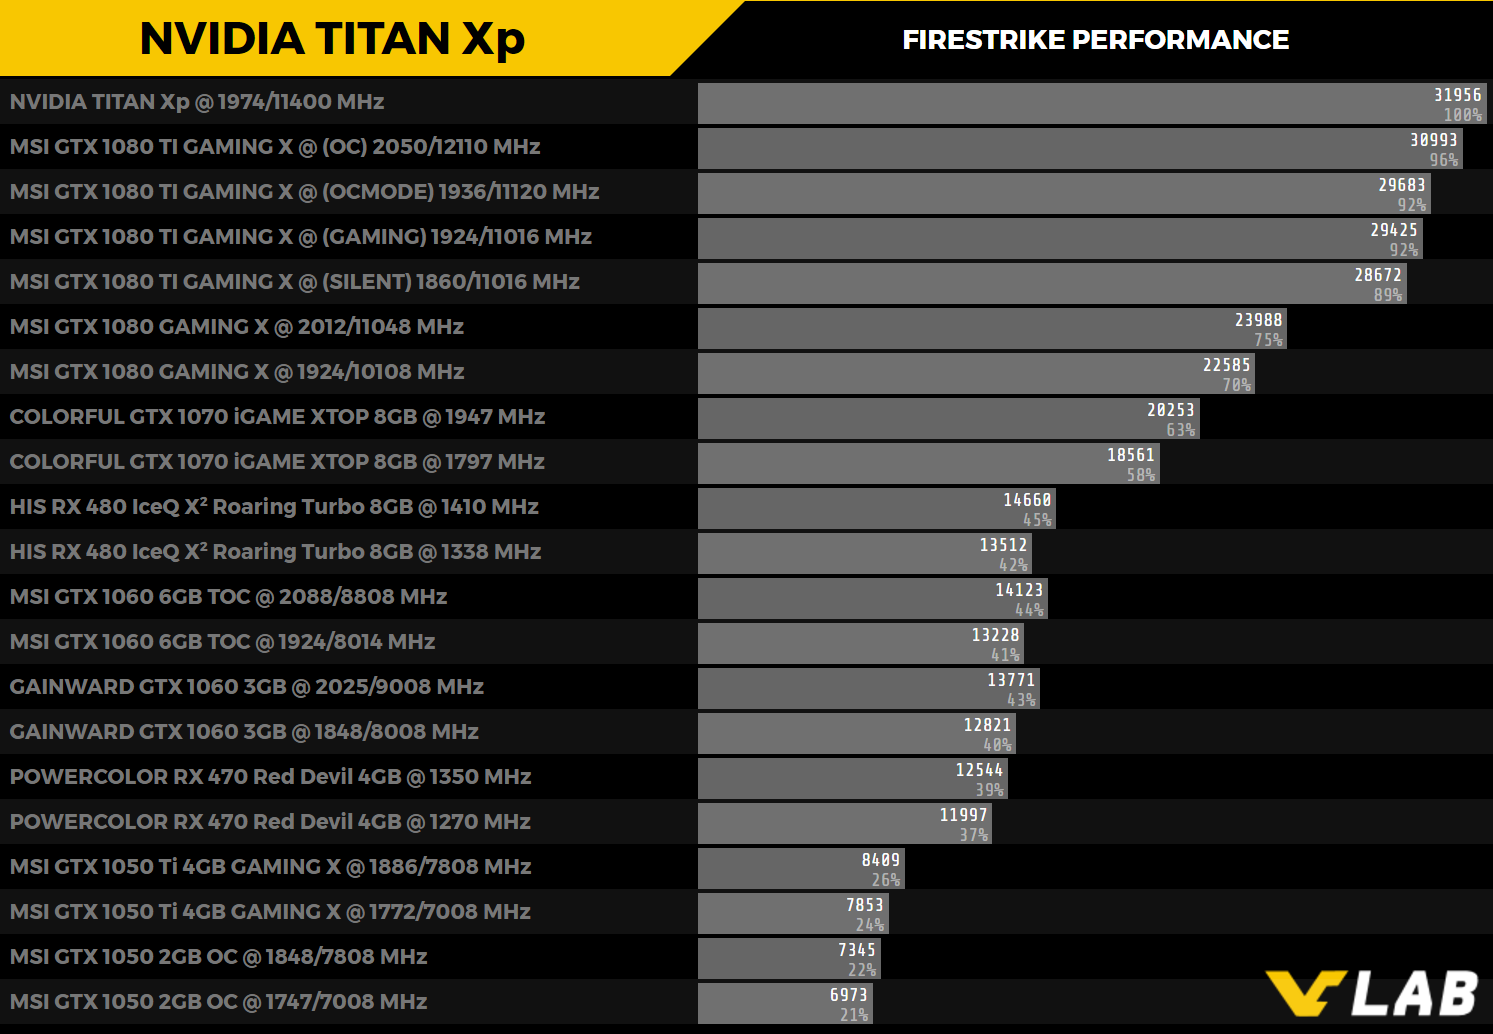 NVIDIA-TITAN-Xp-3DMark-Fire-Strike-1.png